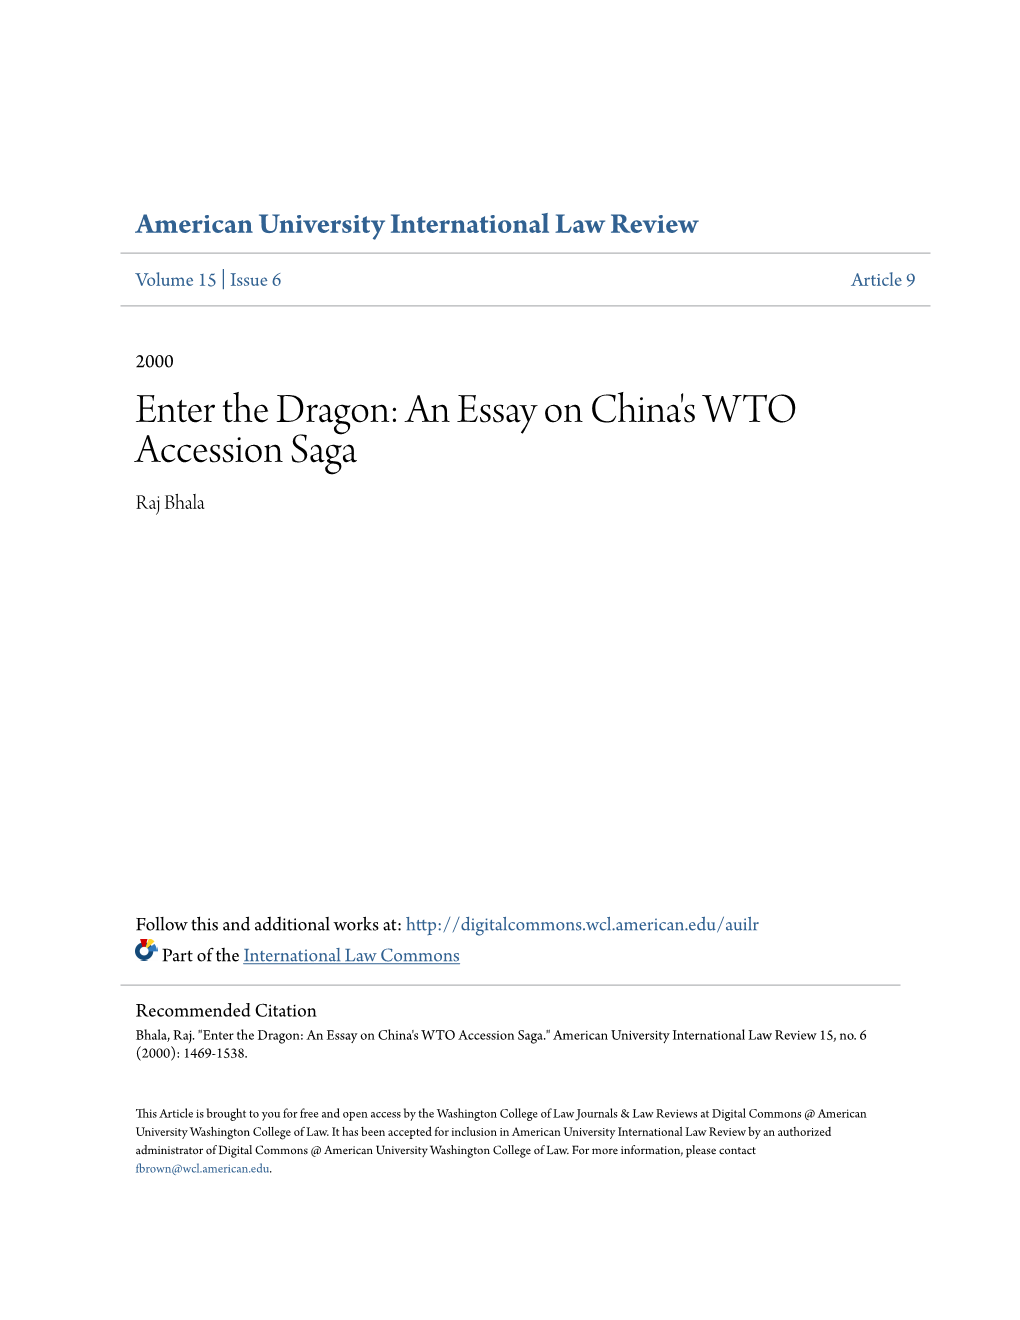 An Essay on China's WTO Accession Saga Raj Bhala